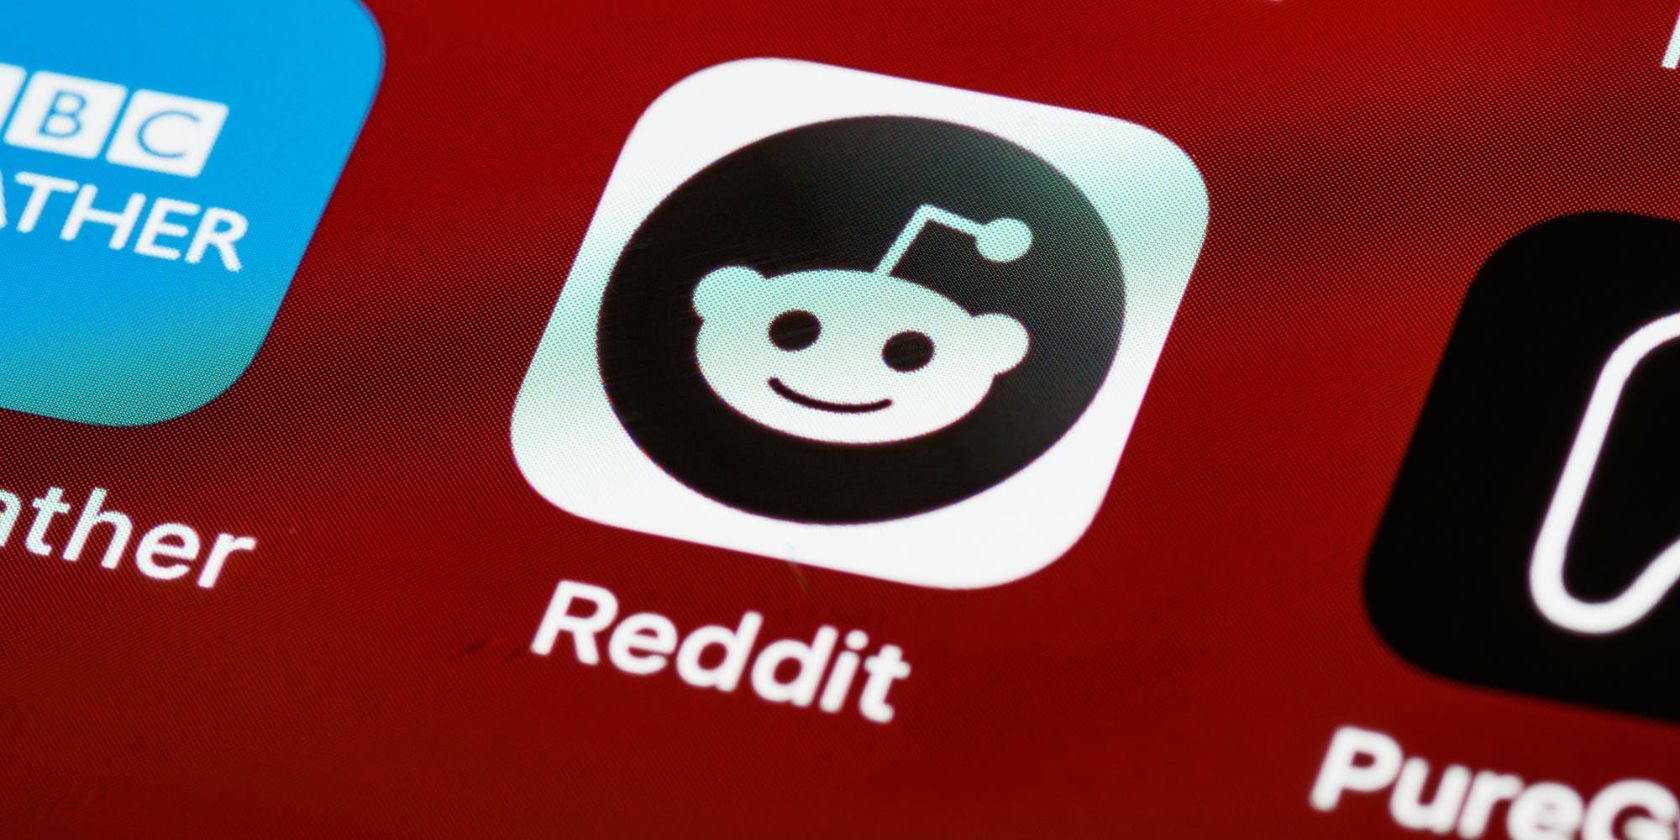 reddit icon on smartphone screen